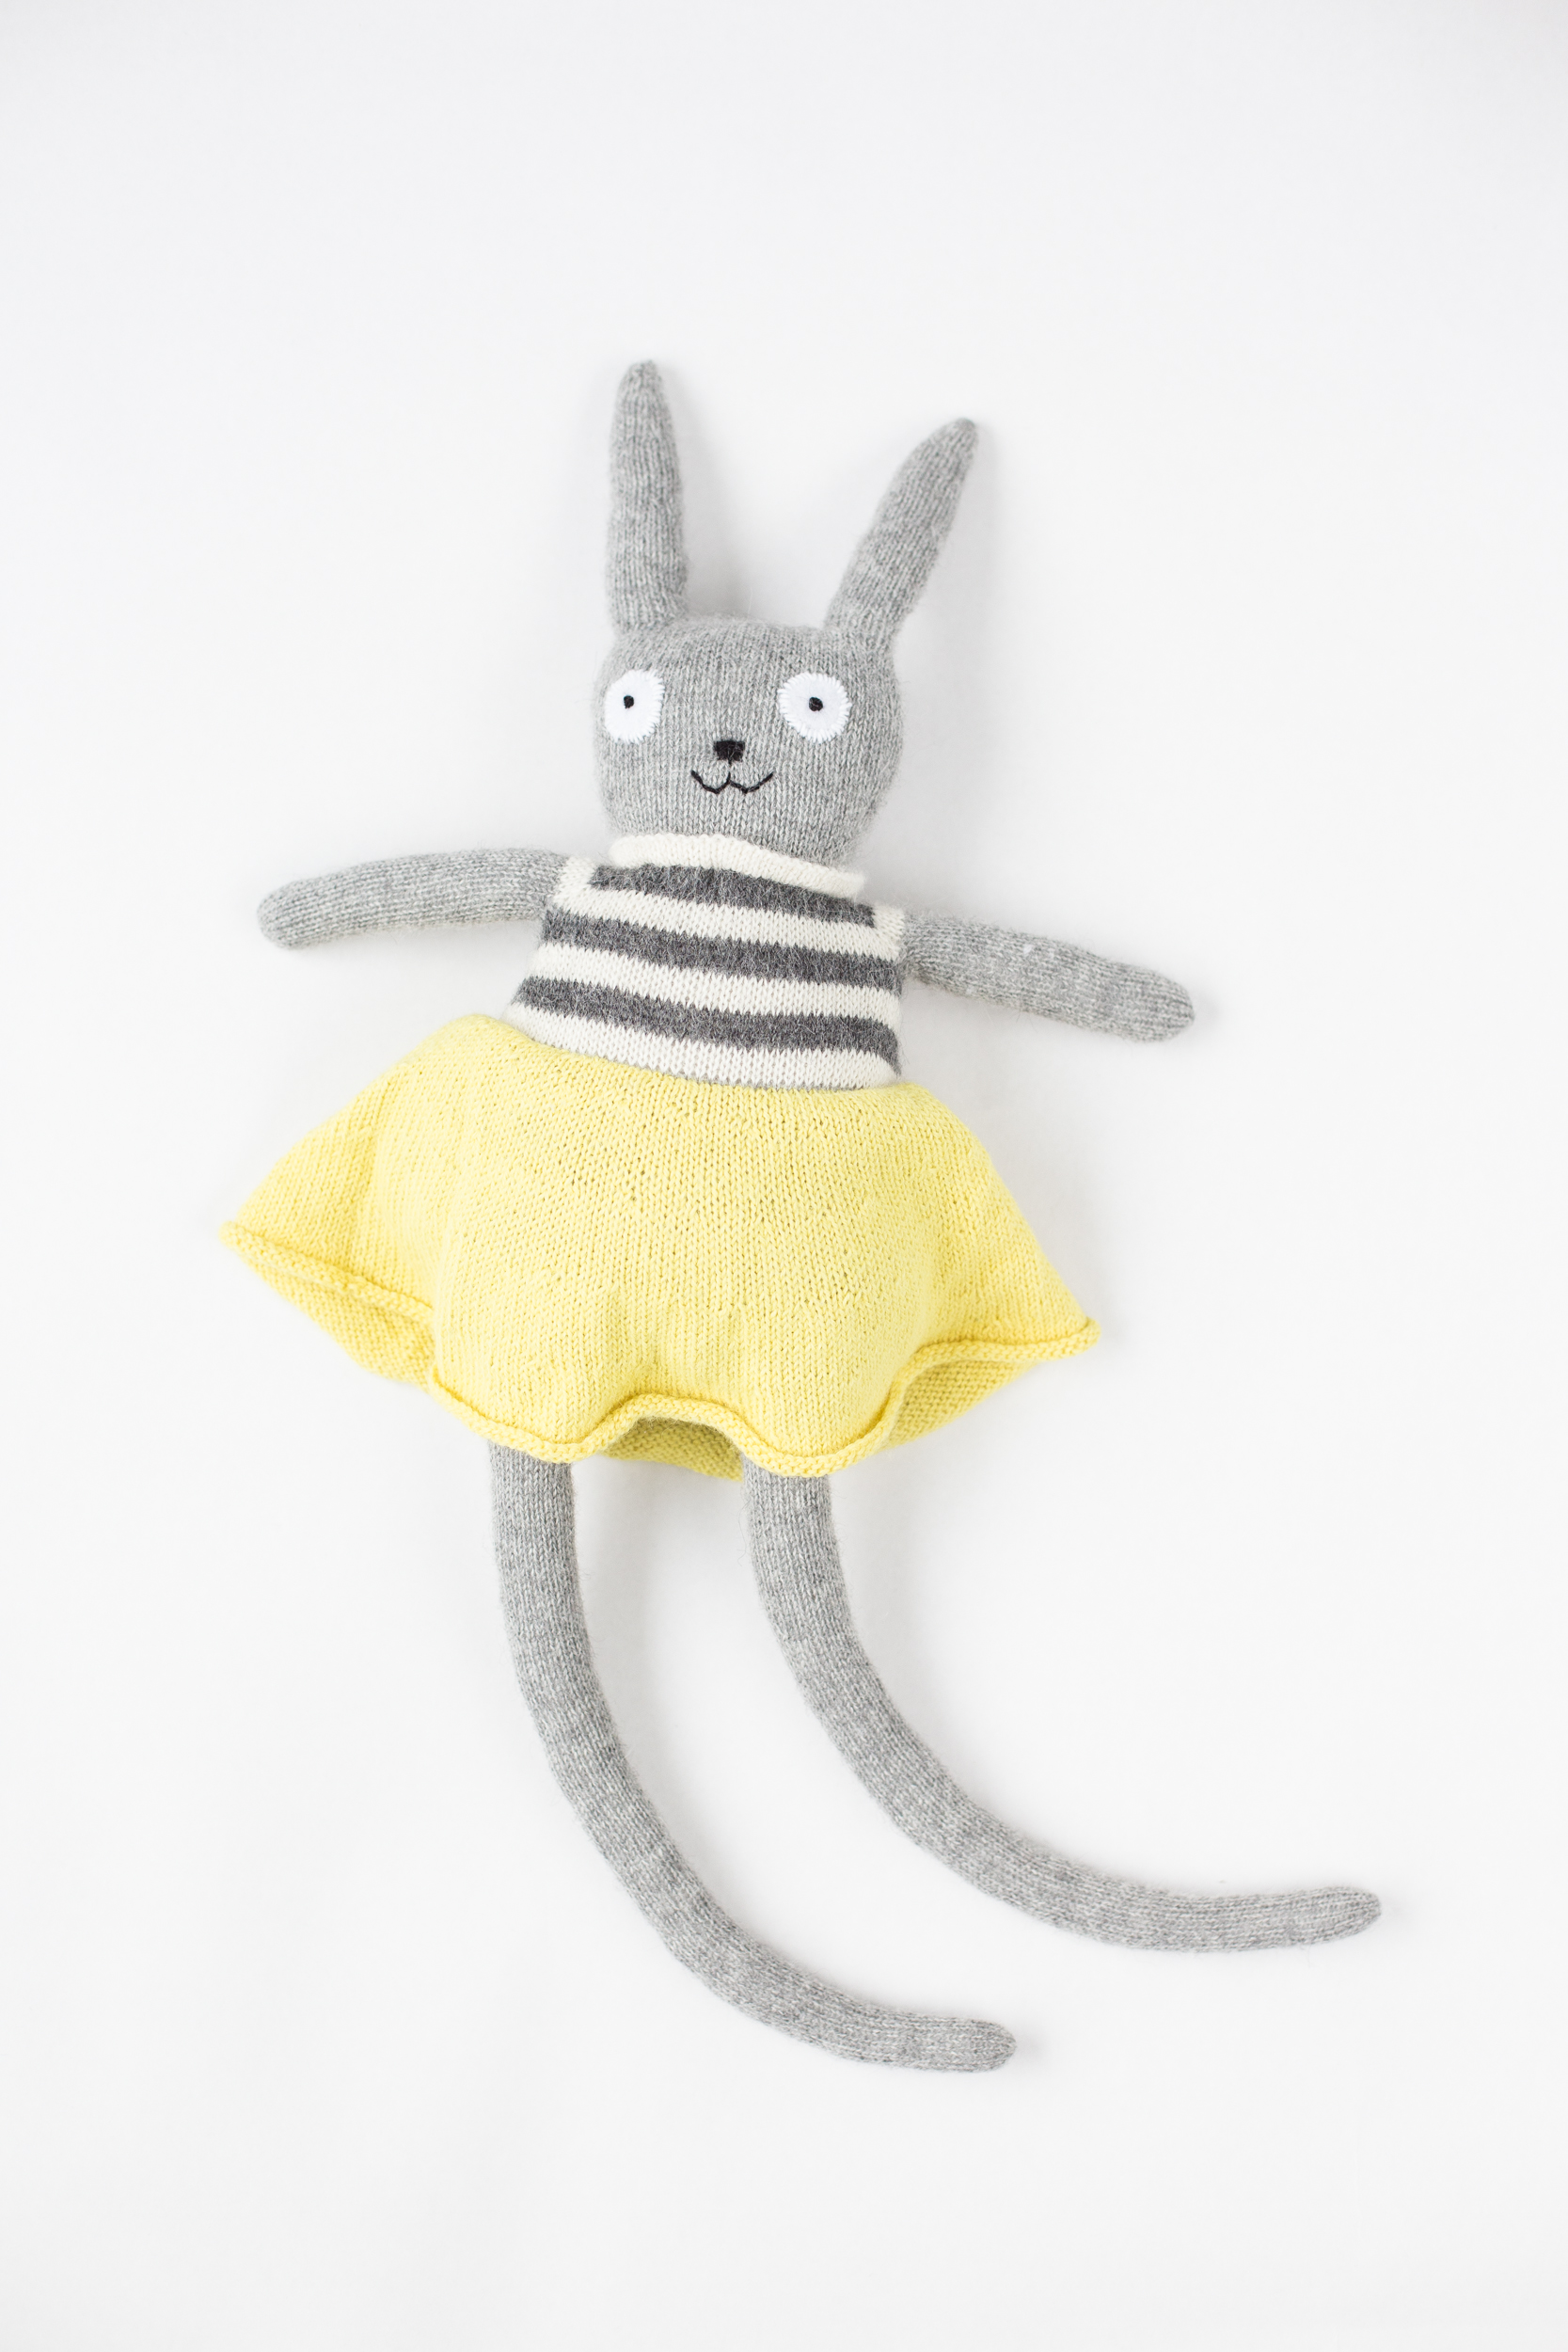 Handmade knittingpattern kidstoy bunny - Plush bunny toy kids. Big stuffed bunny. Handmade in 100 % baby alpaca. - 13/03/2017